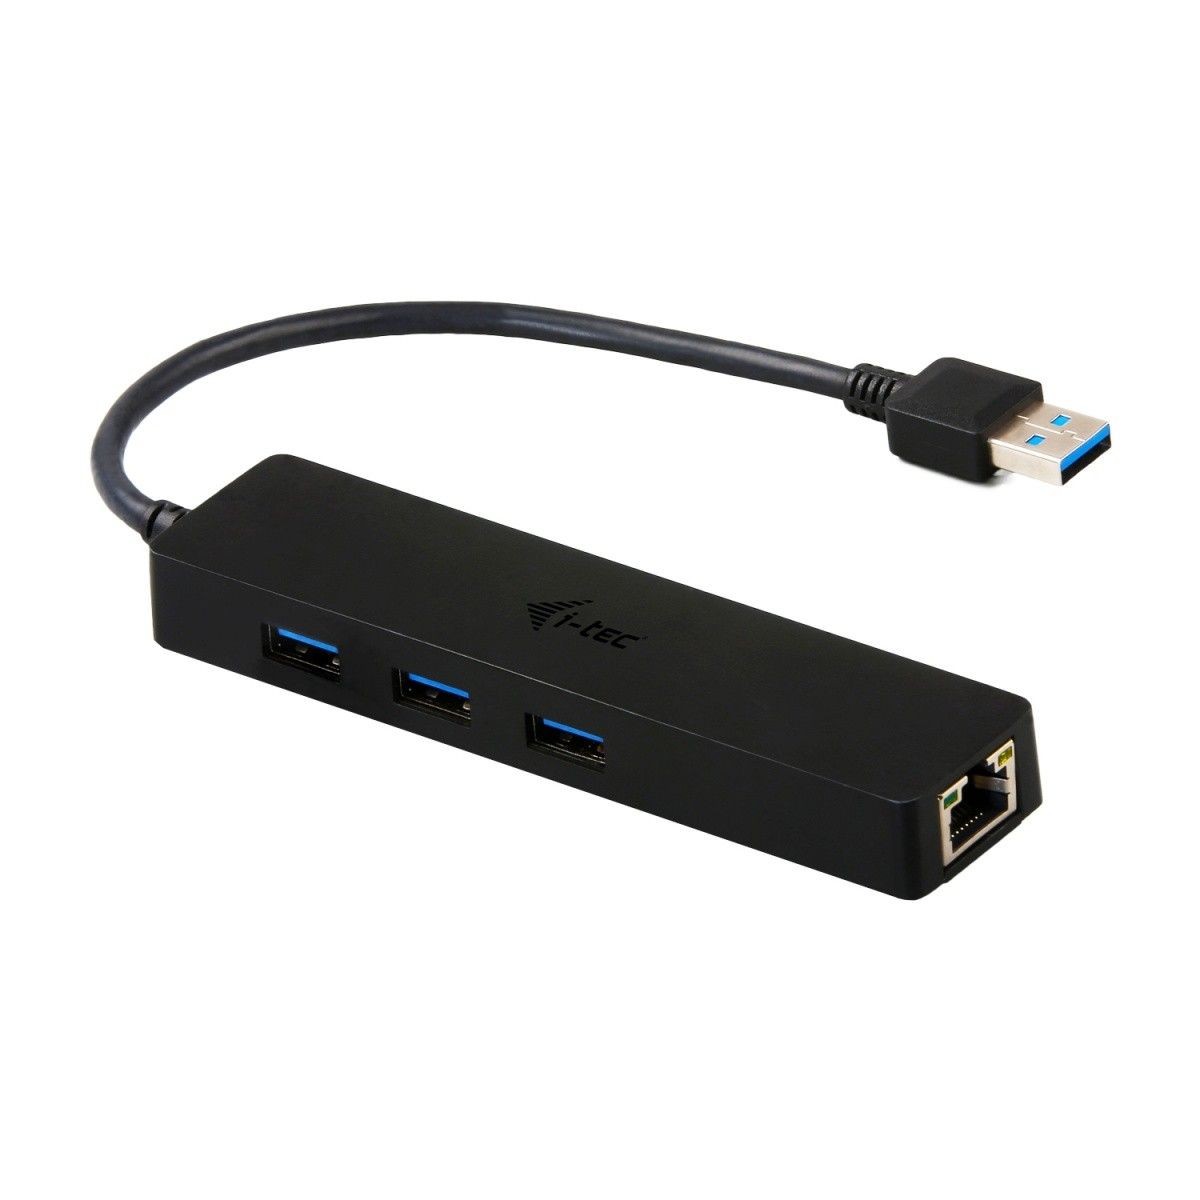 iTec USB 3.0 Slim HUB 3 Port + Gigabit Ethernet 10/100/1000